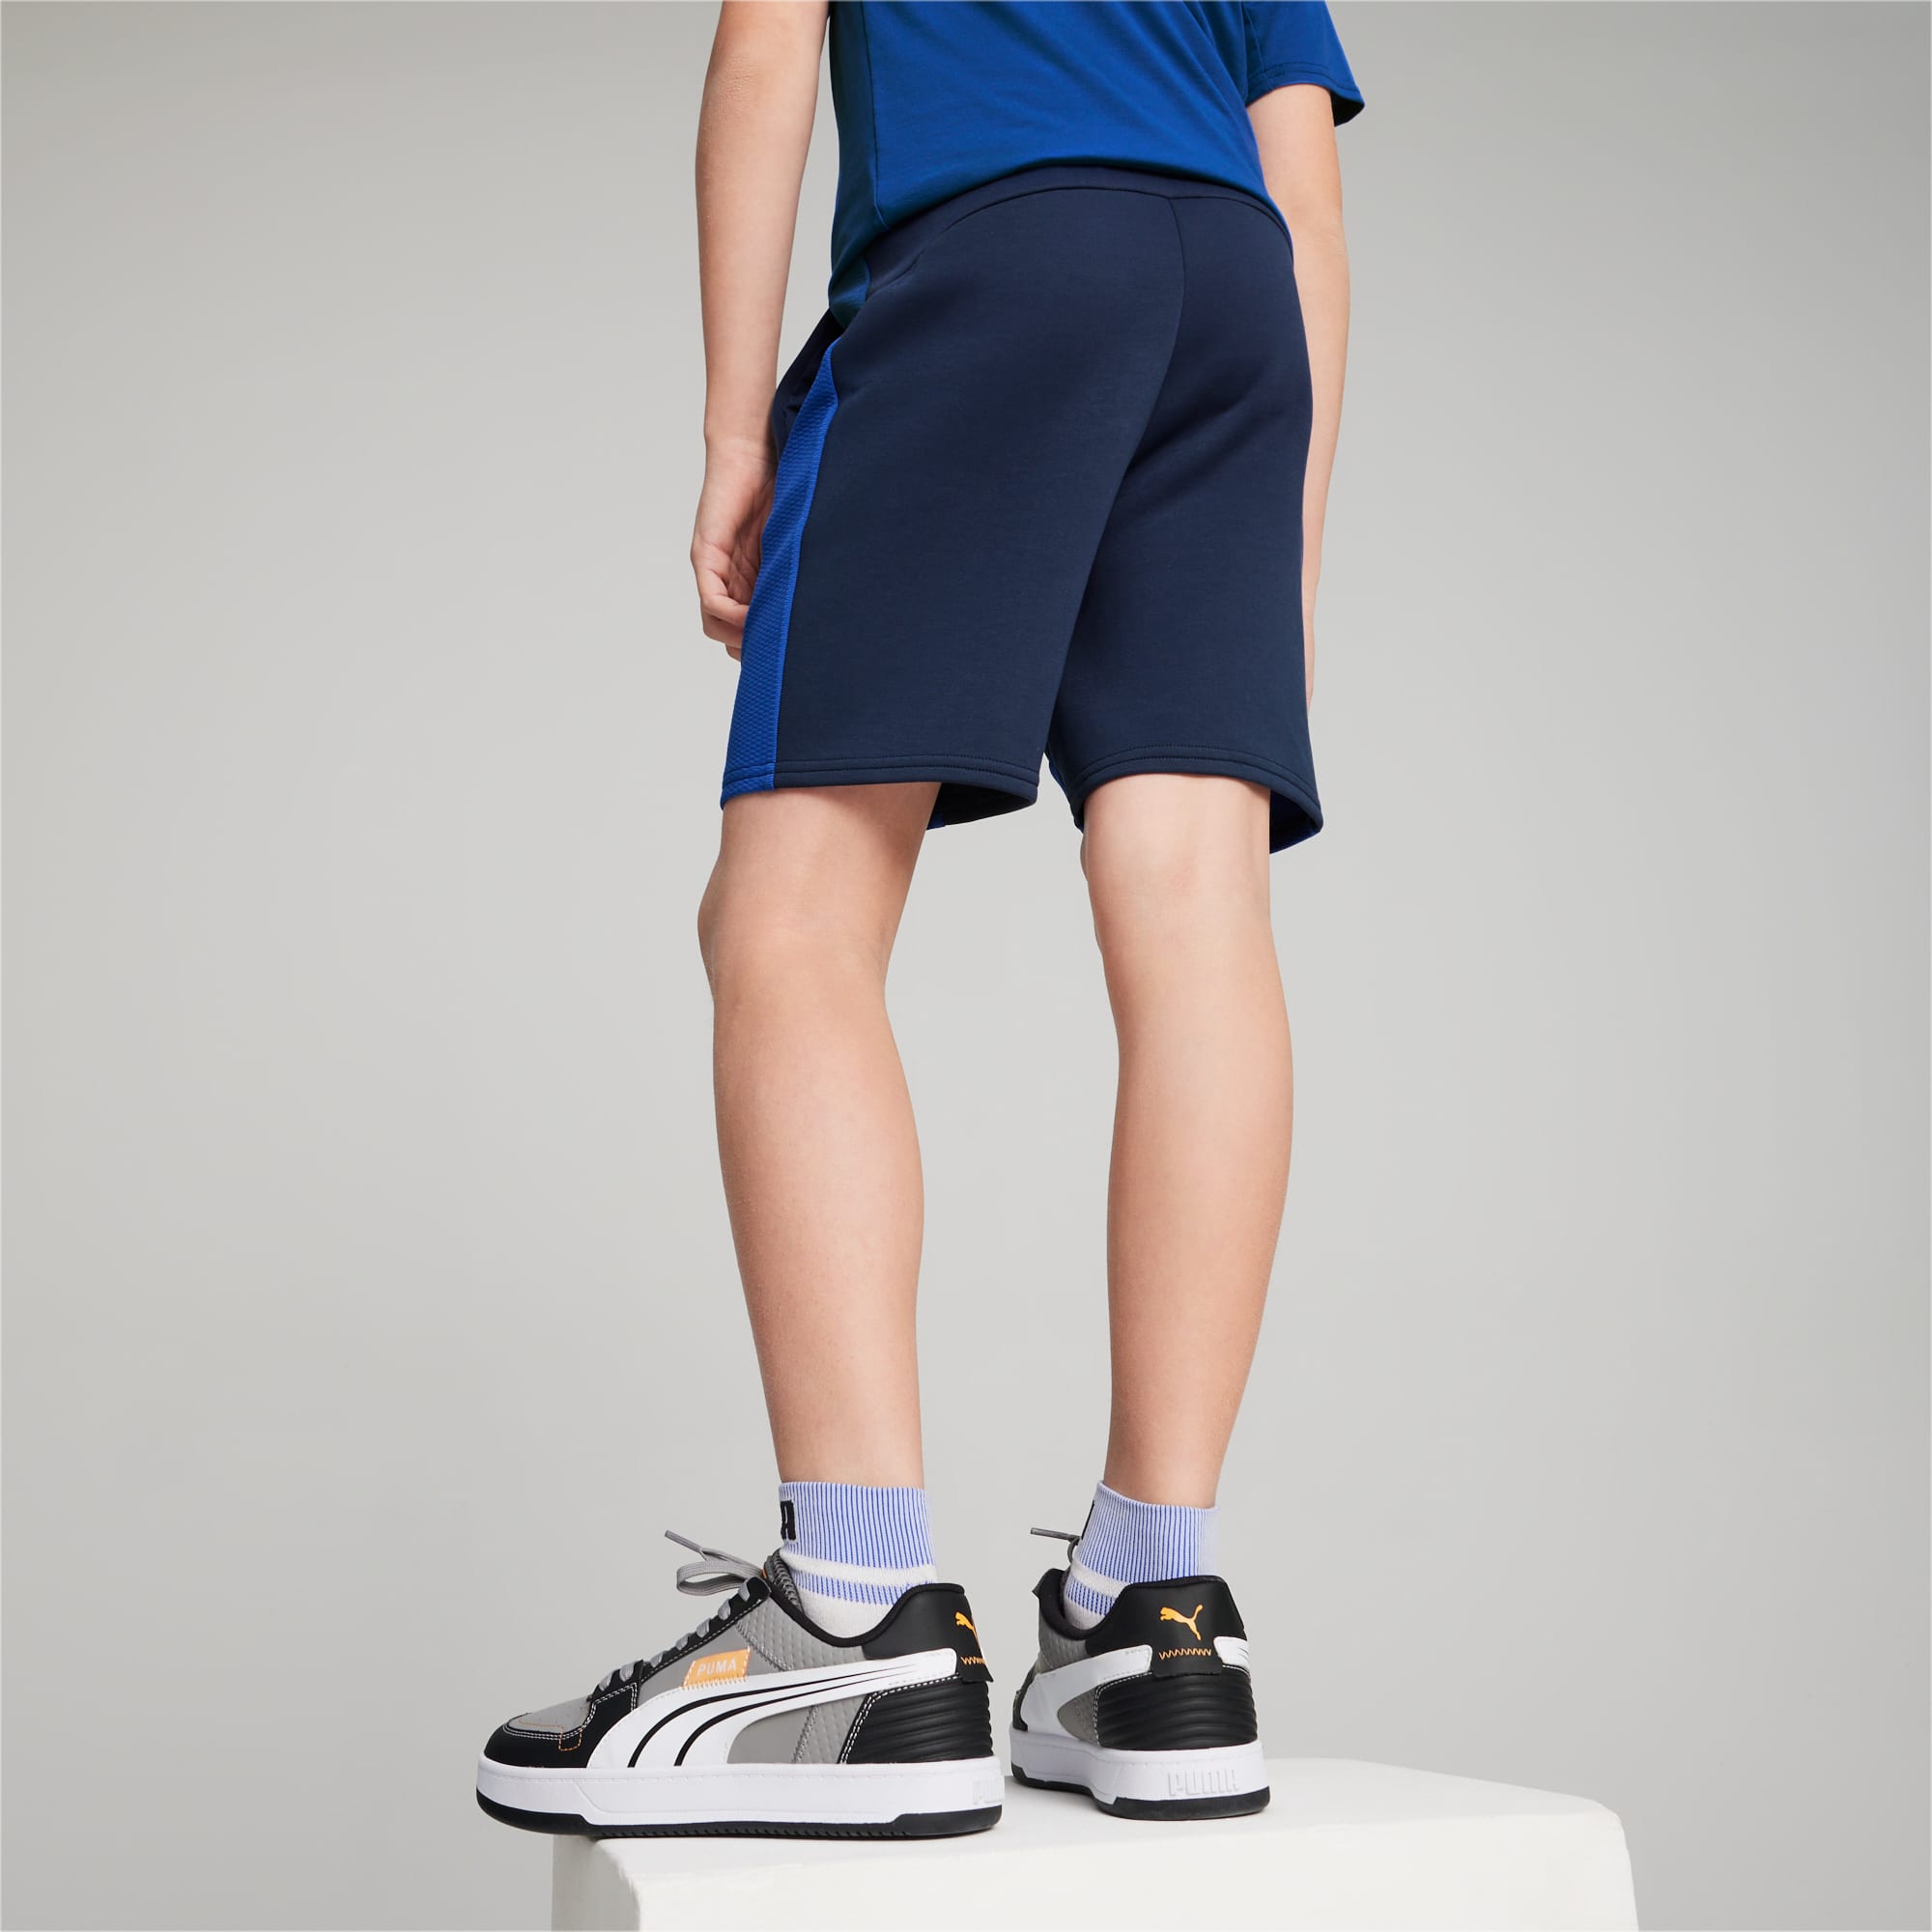 PUMA Evostripe Youth Shorts, Dark Blue, Size 116, Clothing